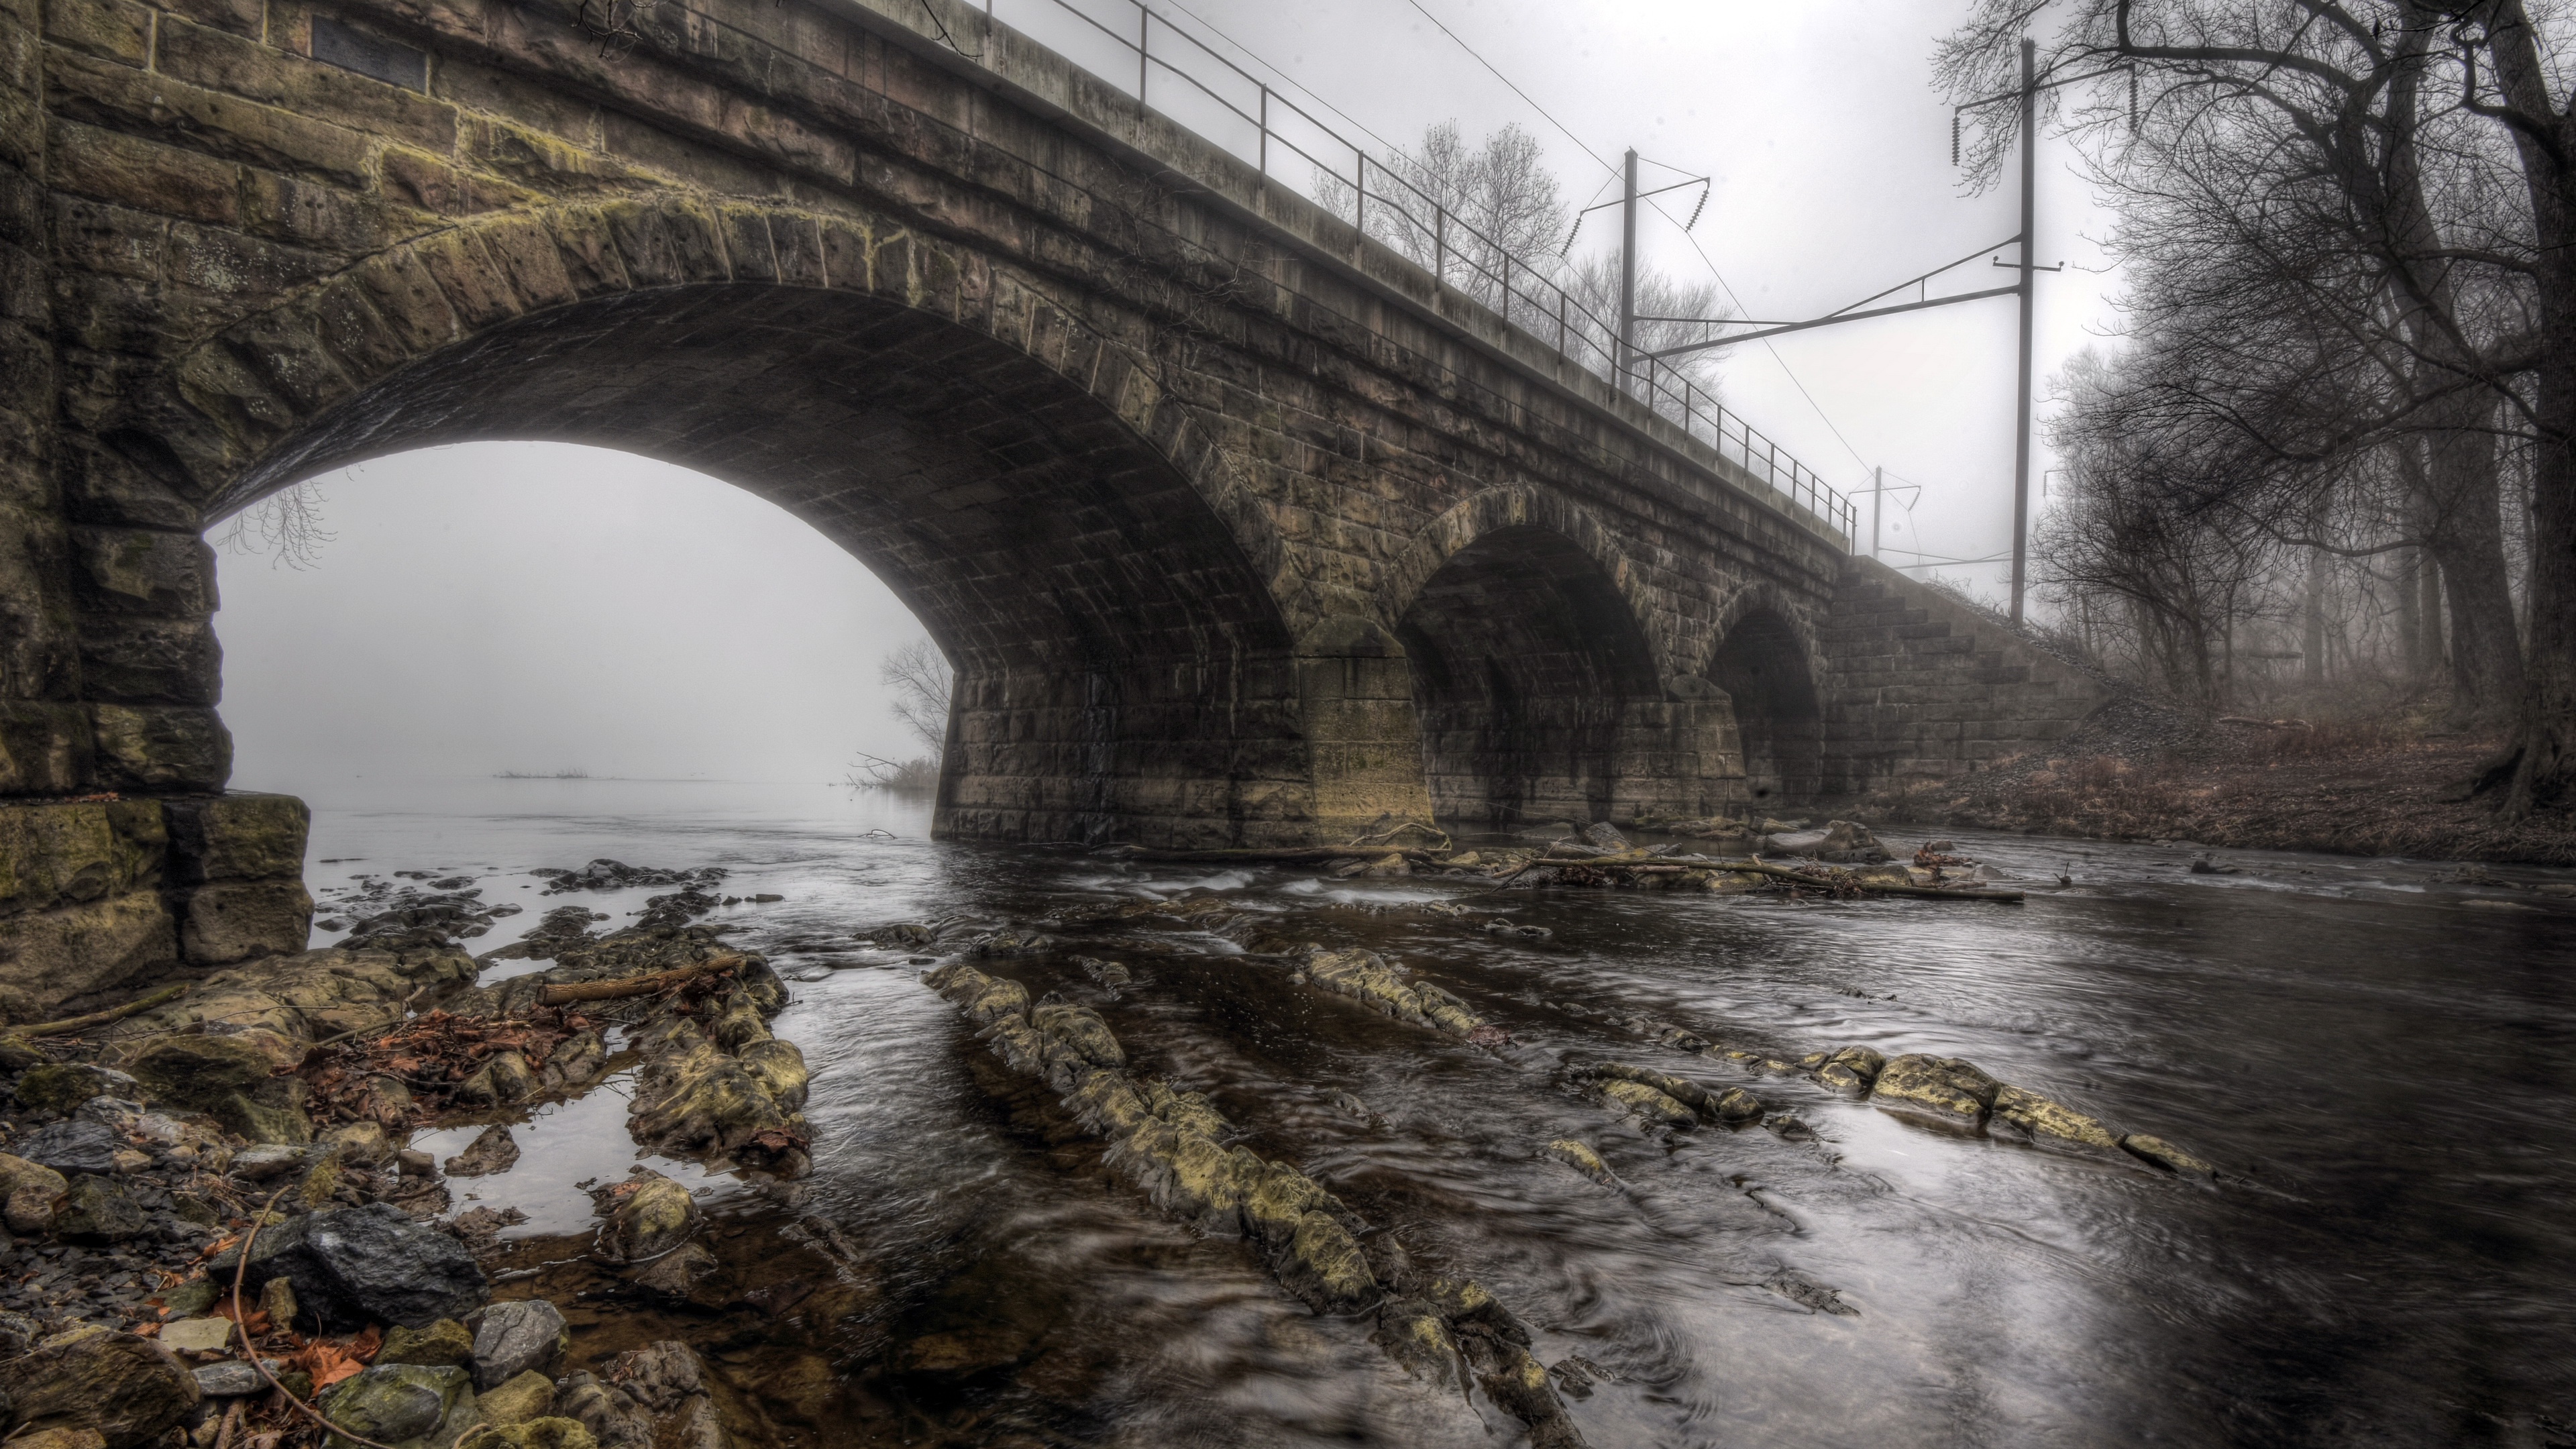 General 3840x2160 river bridge outdoors HDR old bridge overcast gloomy fall